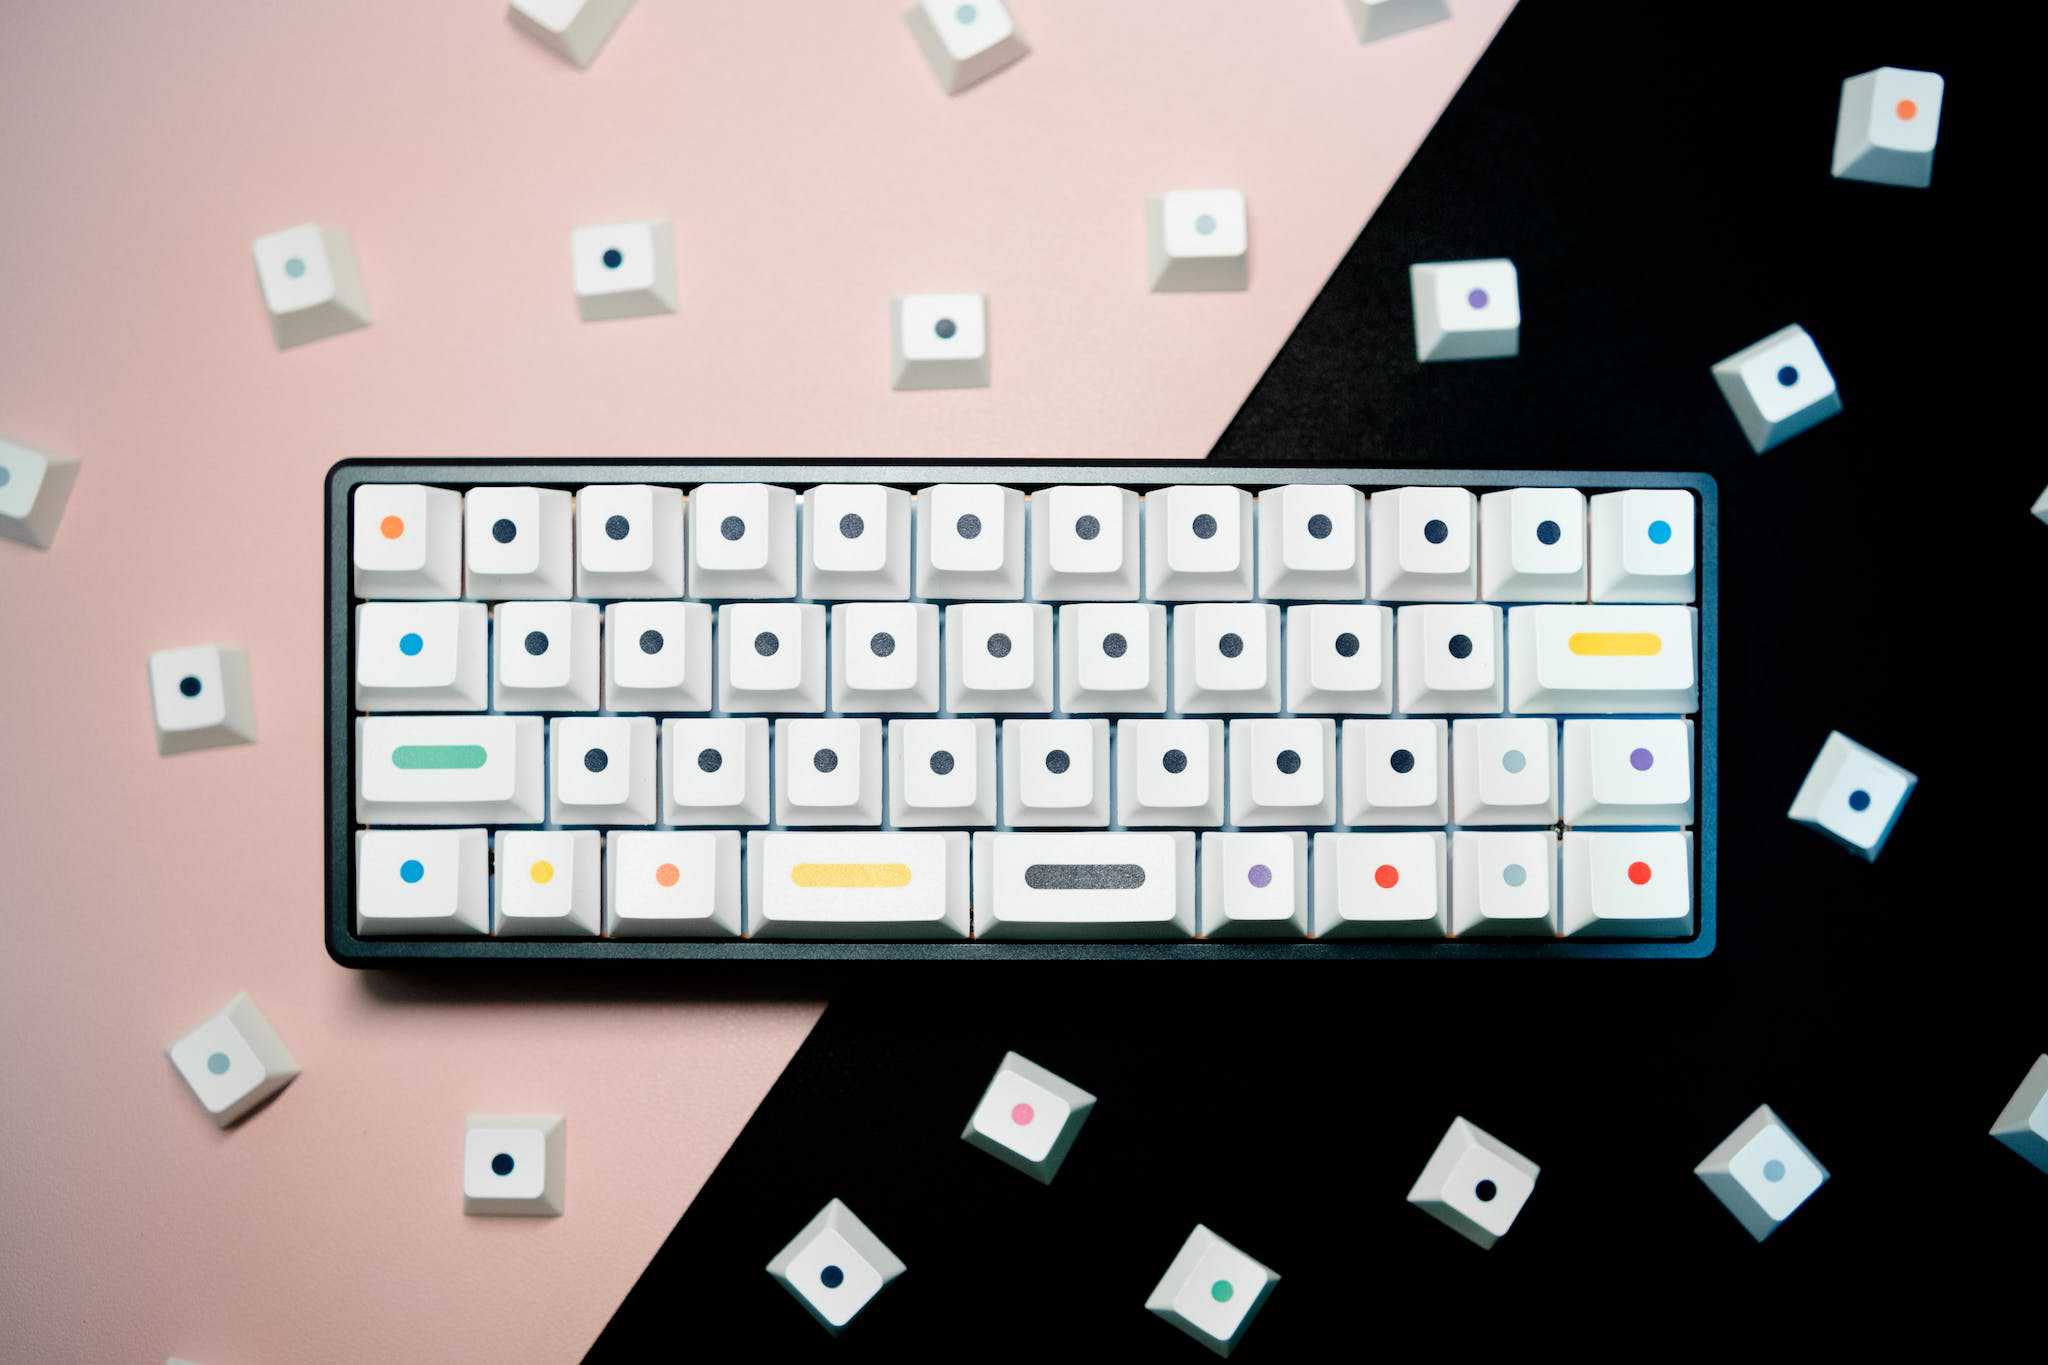 Mini Keyboard - Small Mechanical Keyboard With GMK Dots Keycaps